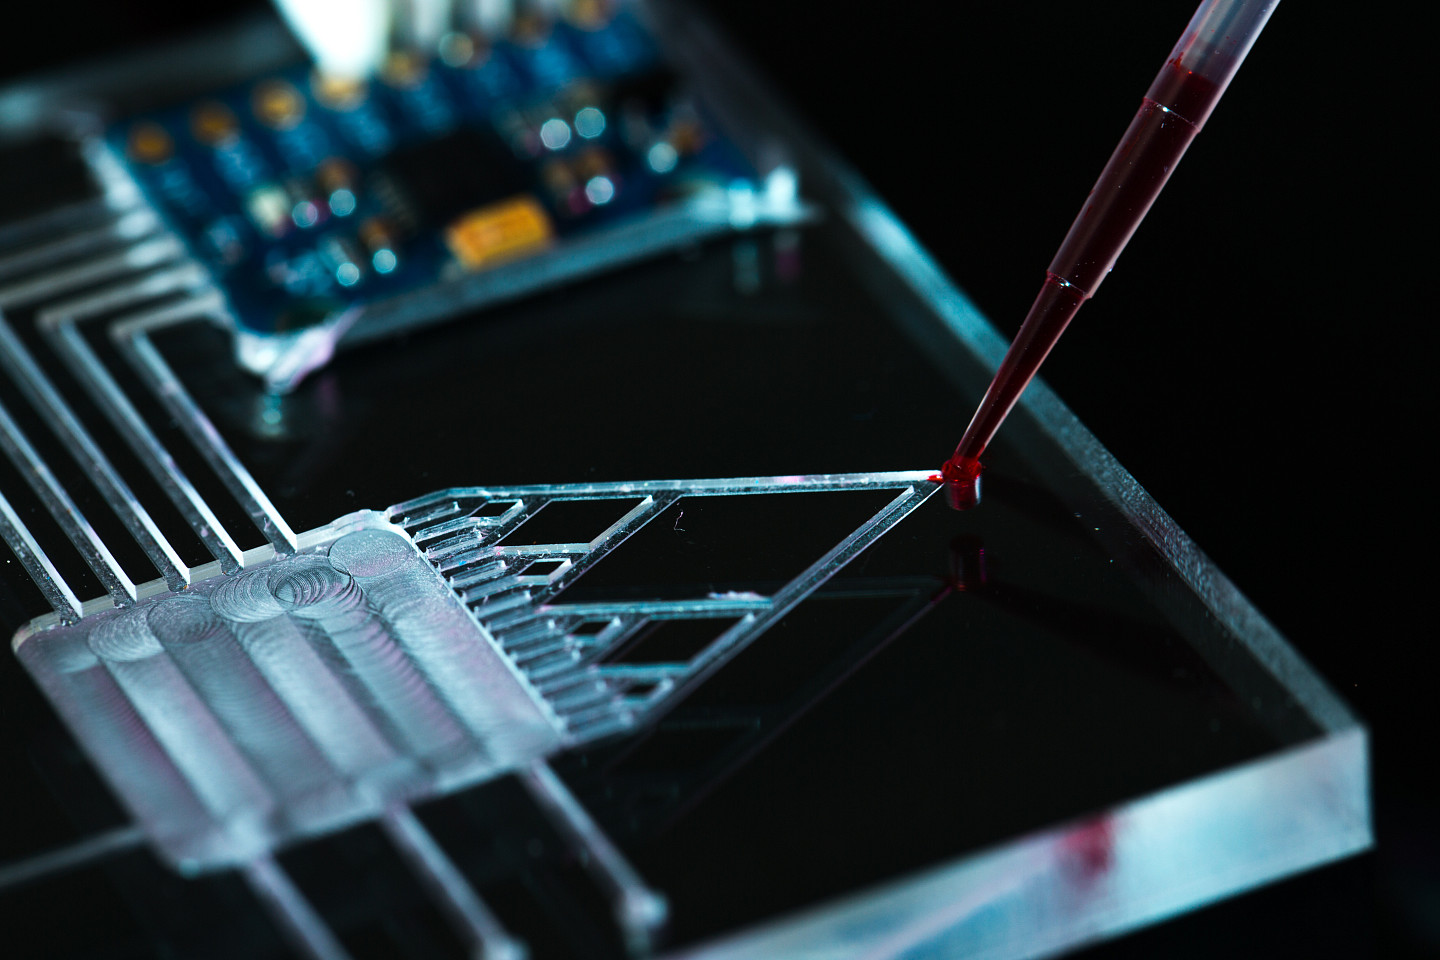 Microfluidic chip sensor